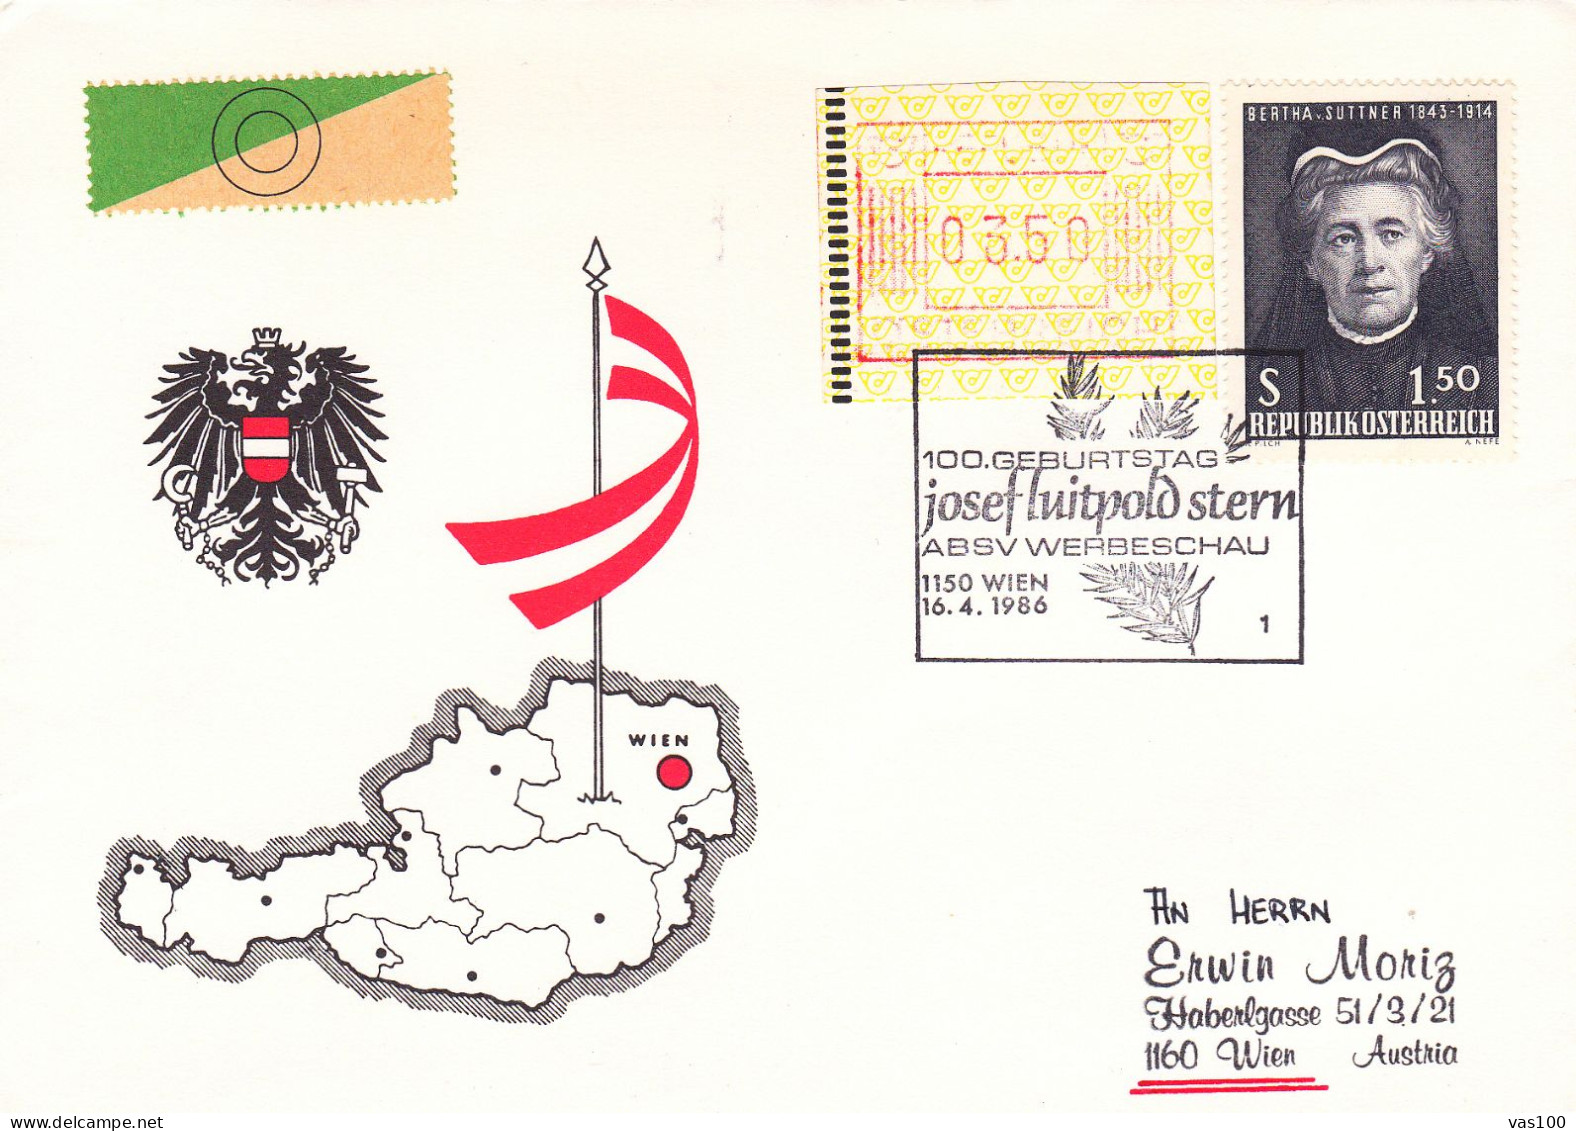 AUSTRIA POSTAL HISTORY / ABSV WERBESCHAU, 16.04.1986 - Briefe U. Dokumente